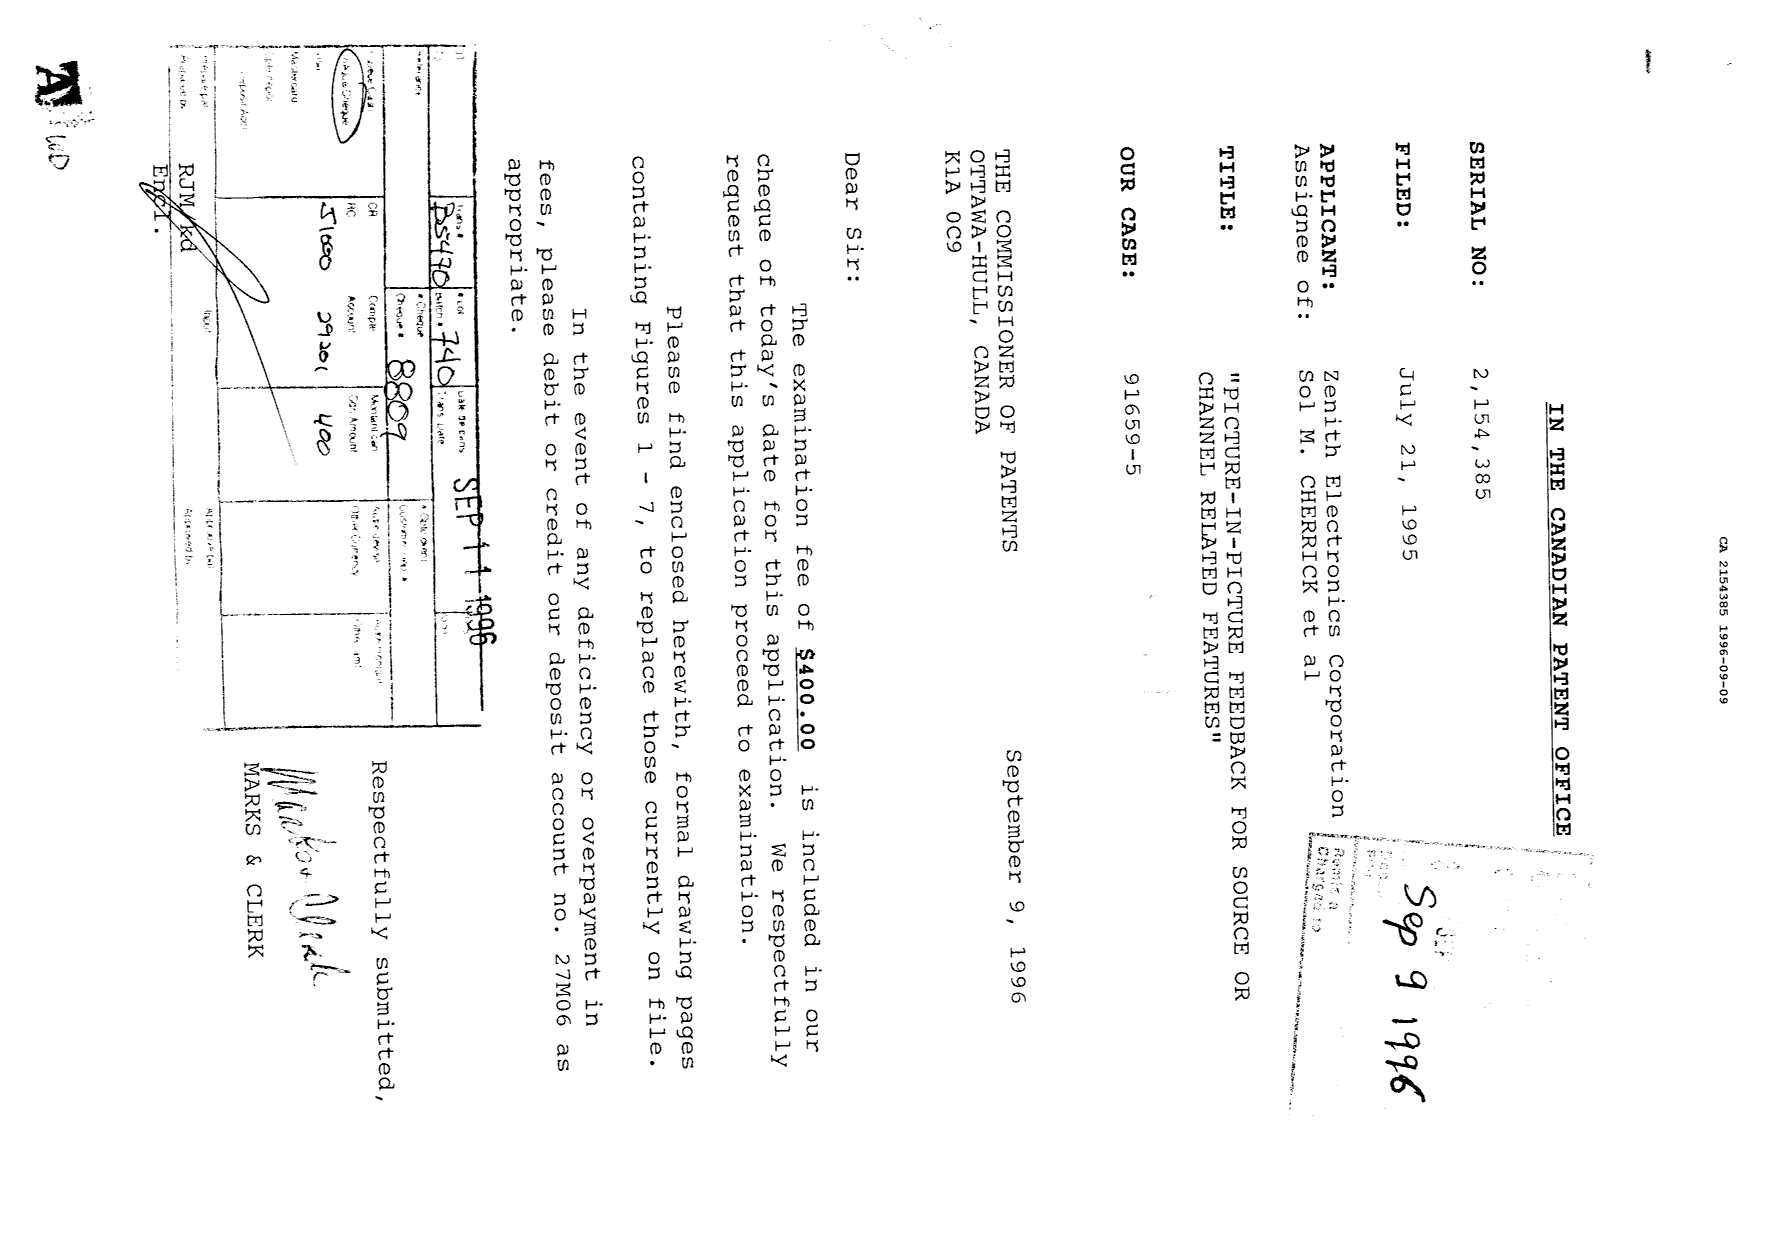 Canadian Patent Document 2154385. Prosecution Correspondence 19960909. Image 1 of 1